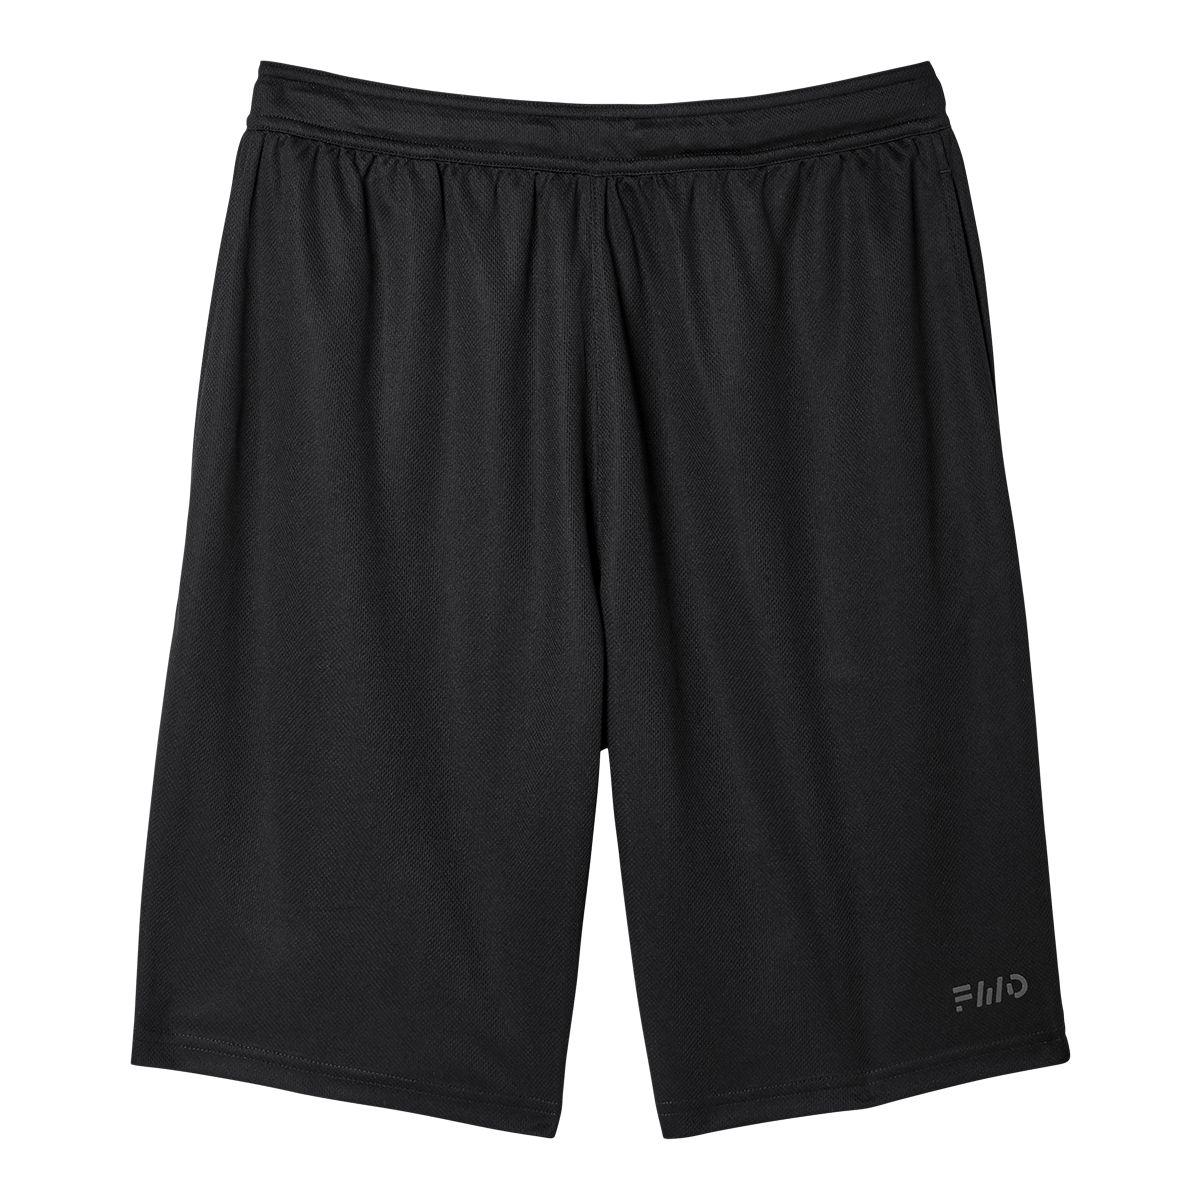 Ripzone Men's Neys 20-in Hybrid Shorts, Quick-Dry